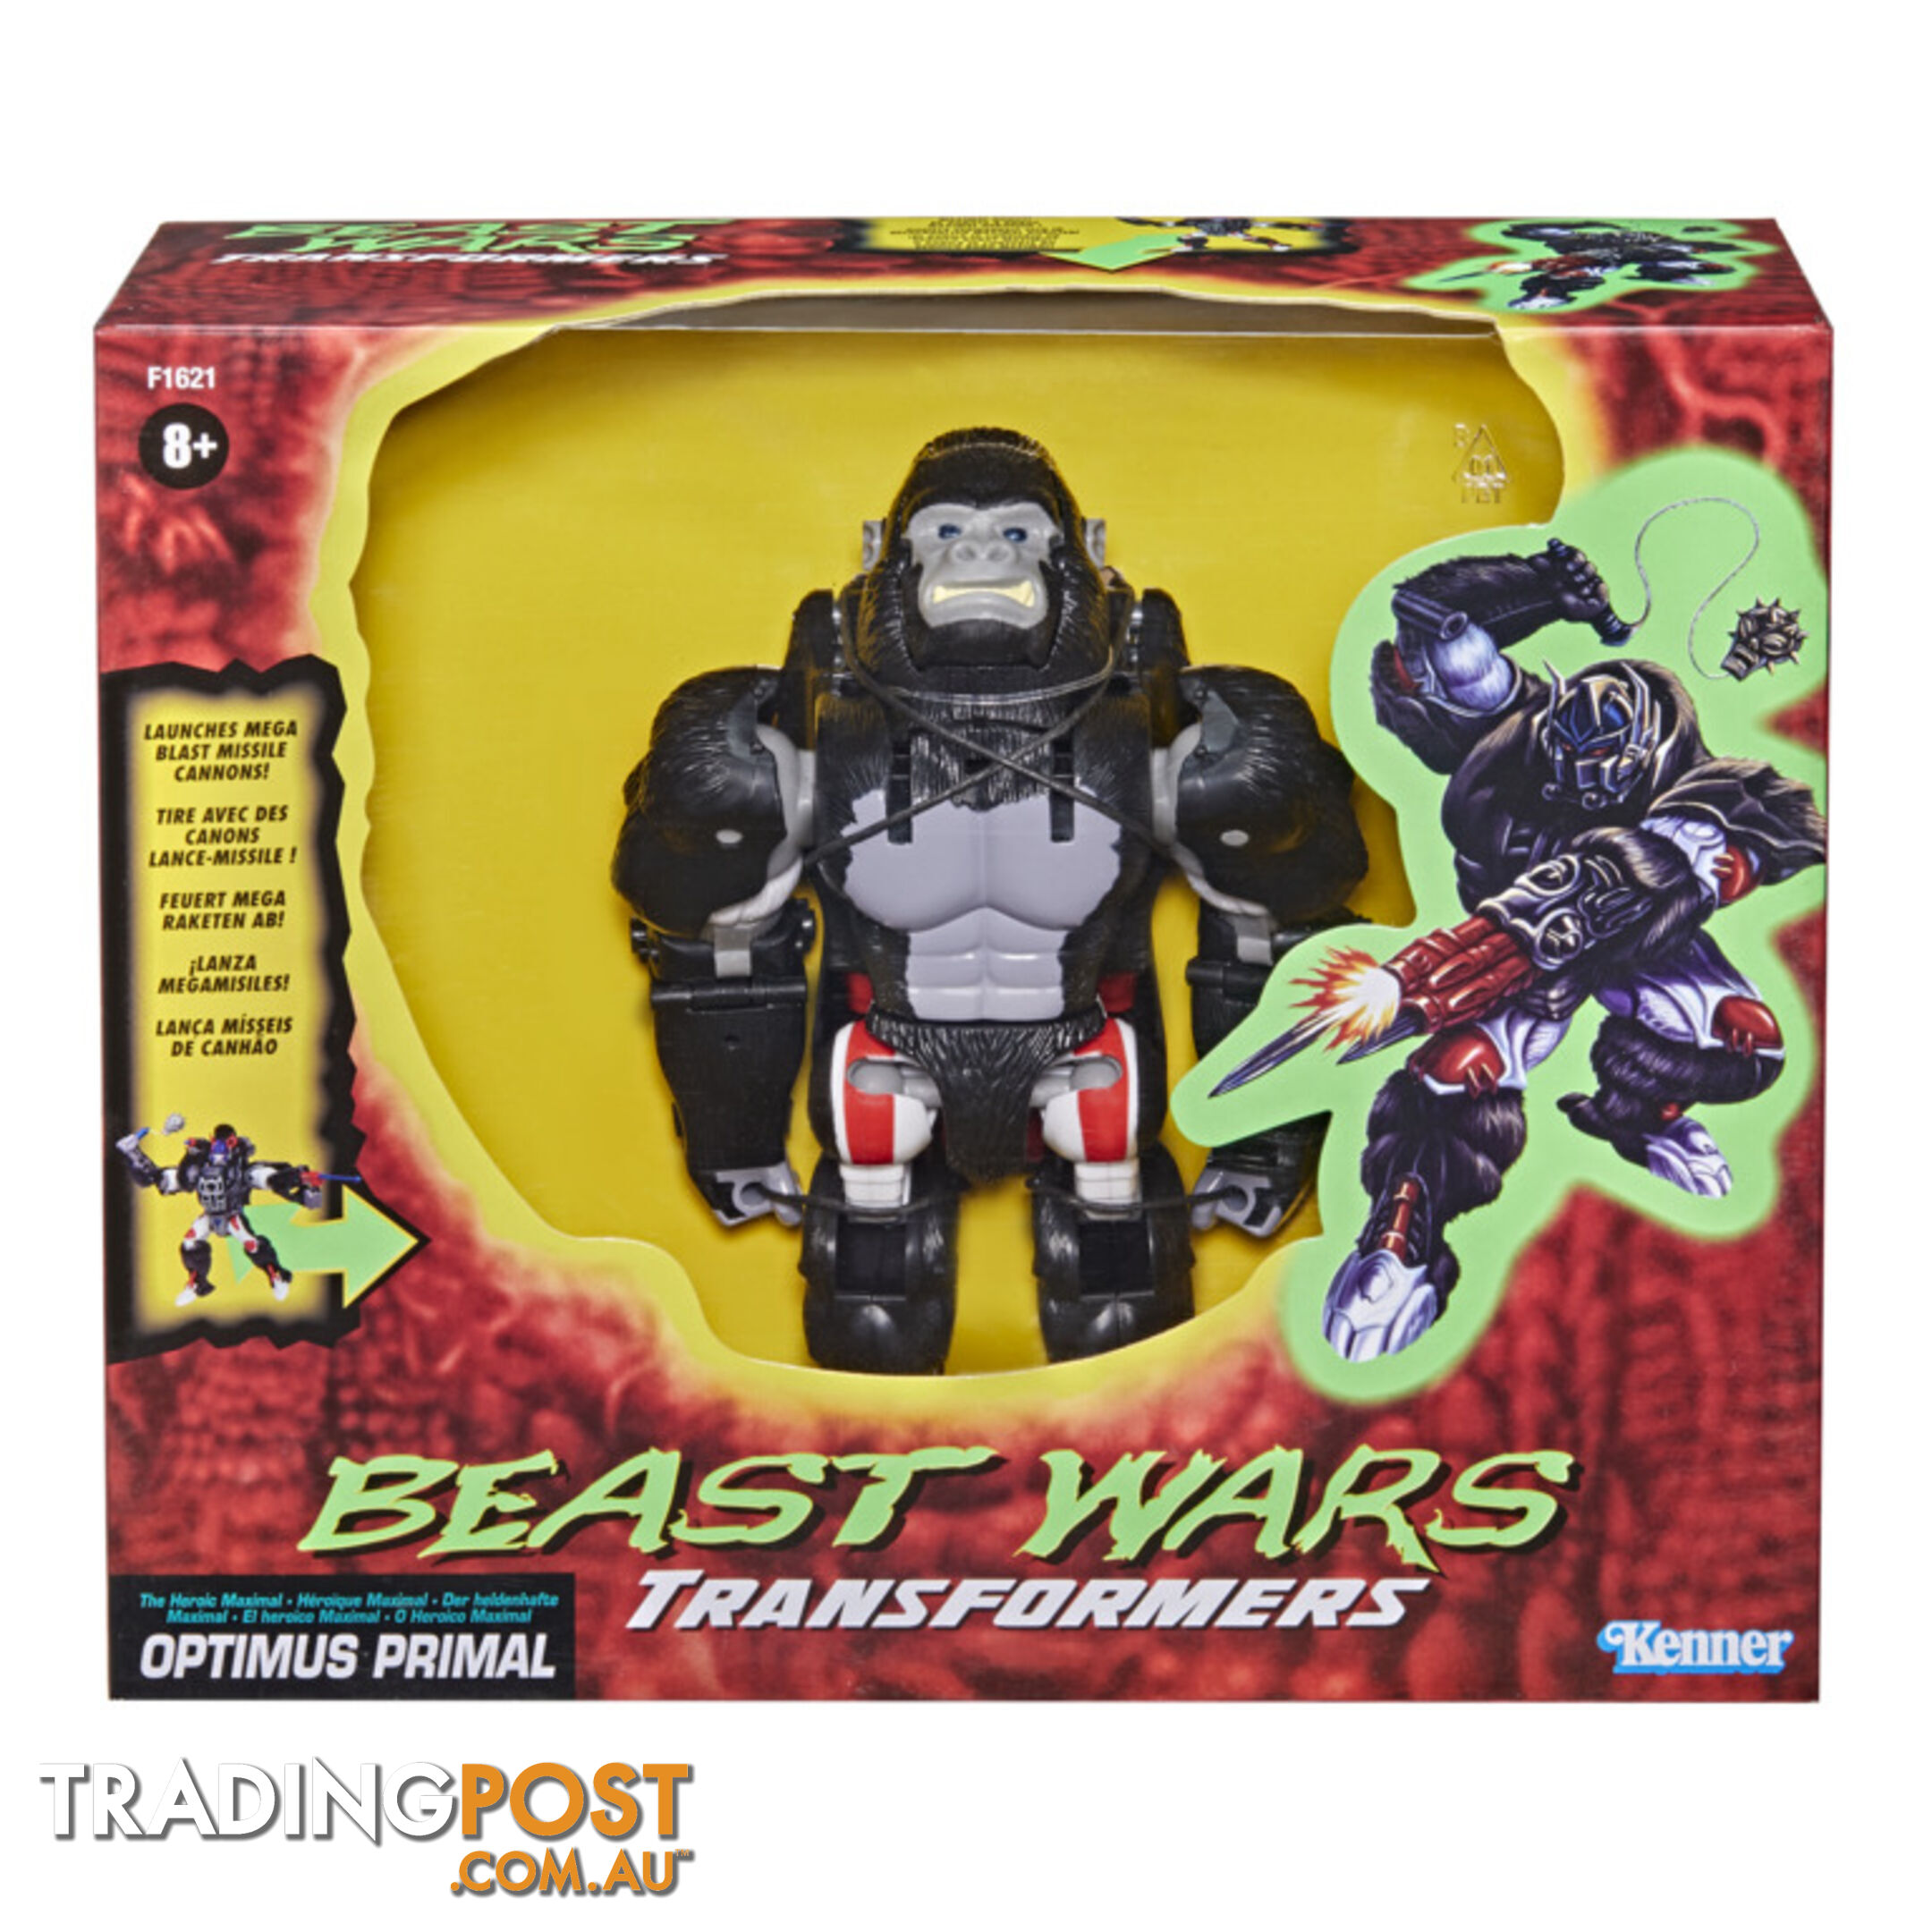 Transformers Vintage Beast Wars Optimus Primal - Hasbro Hbf16215aa0 - 5010993869862